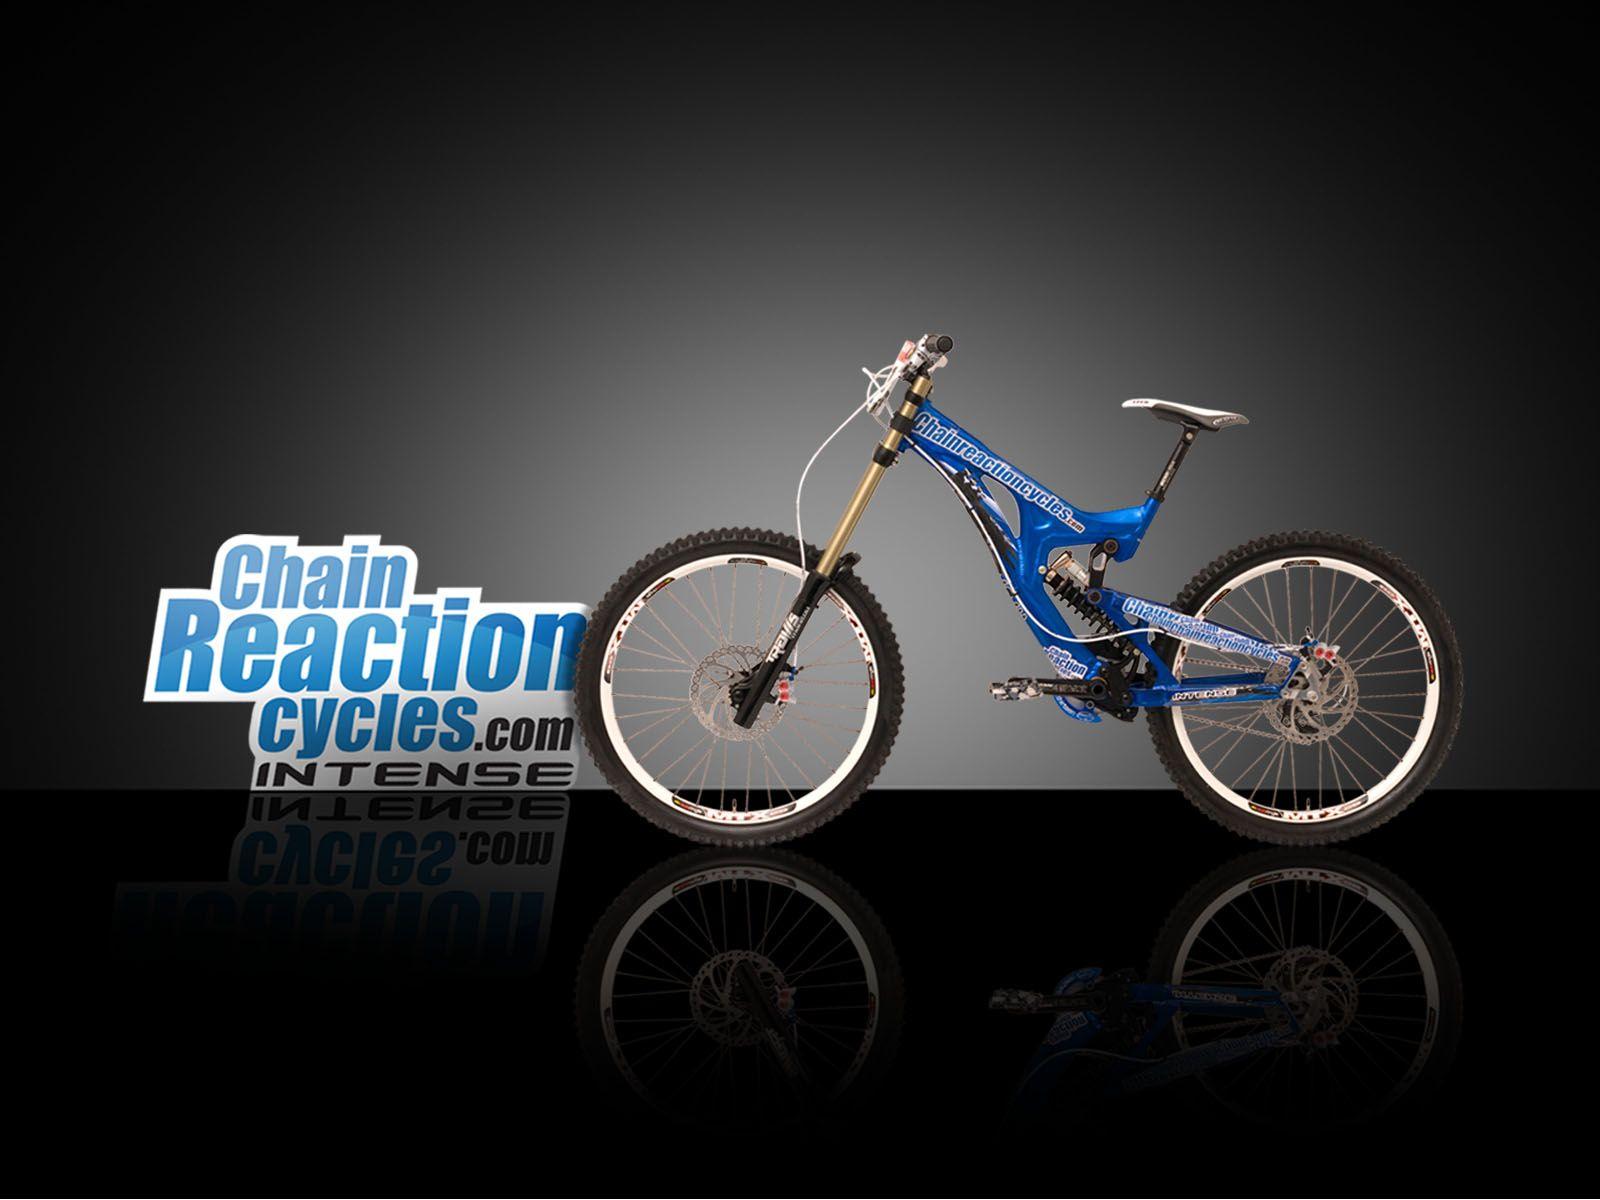 Download wallpaper: wallpaper bicycle, large bike, velo wallpaper